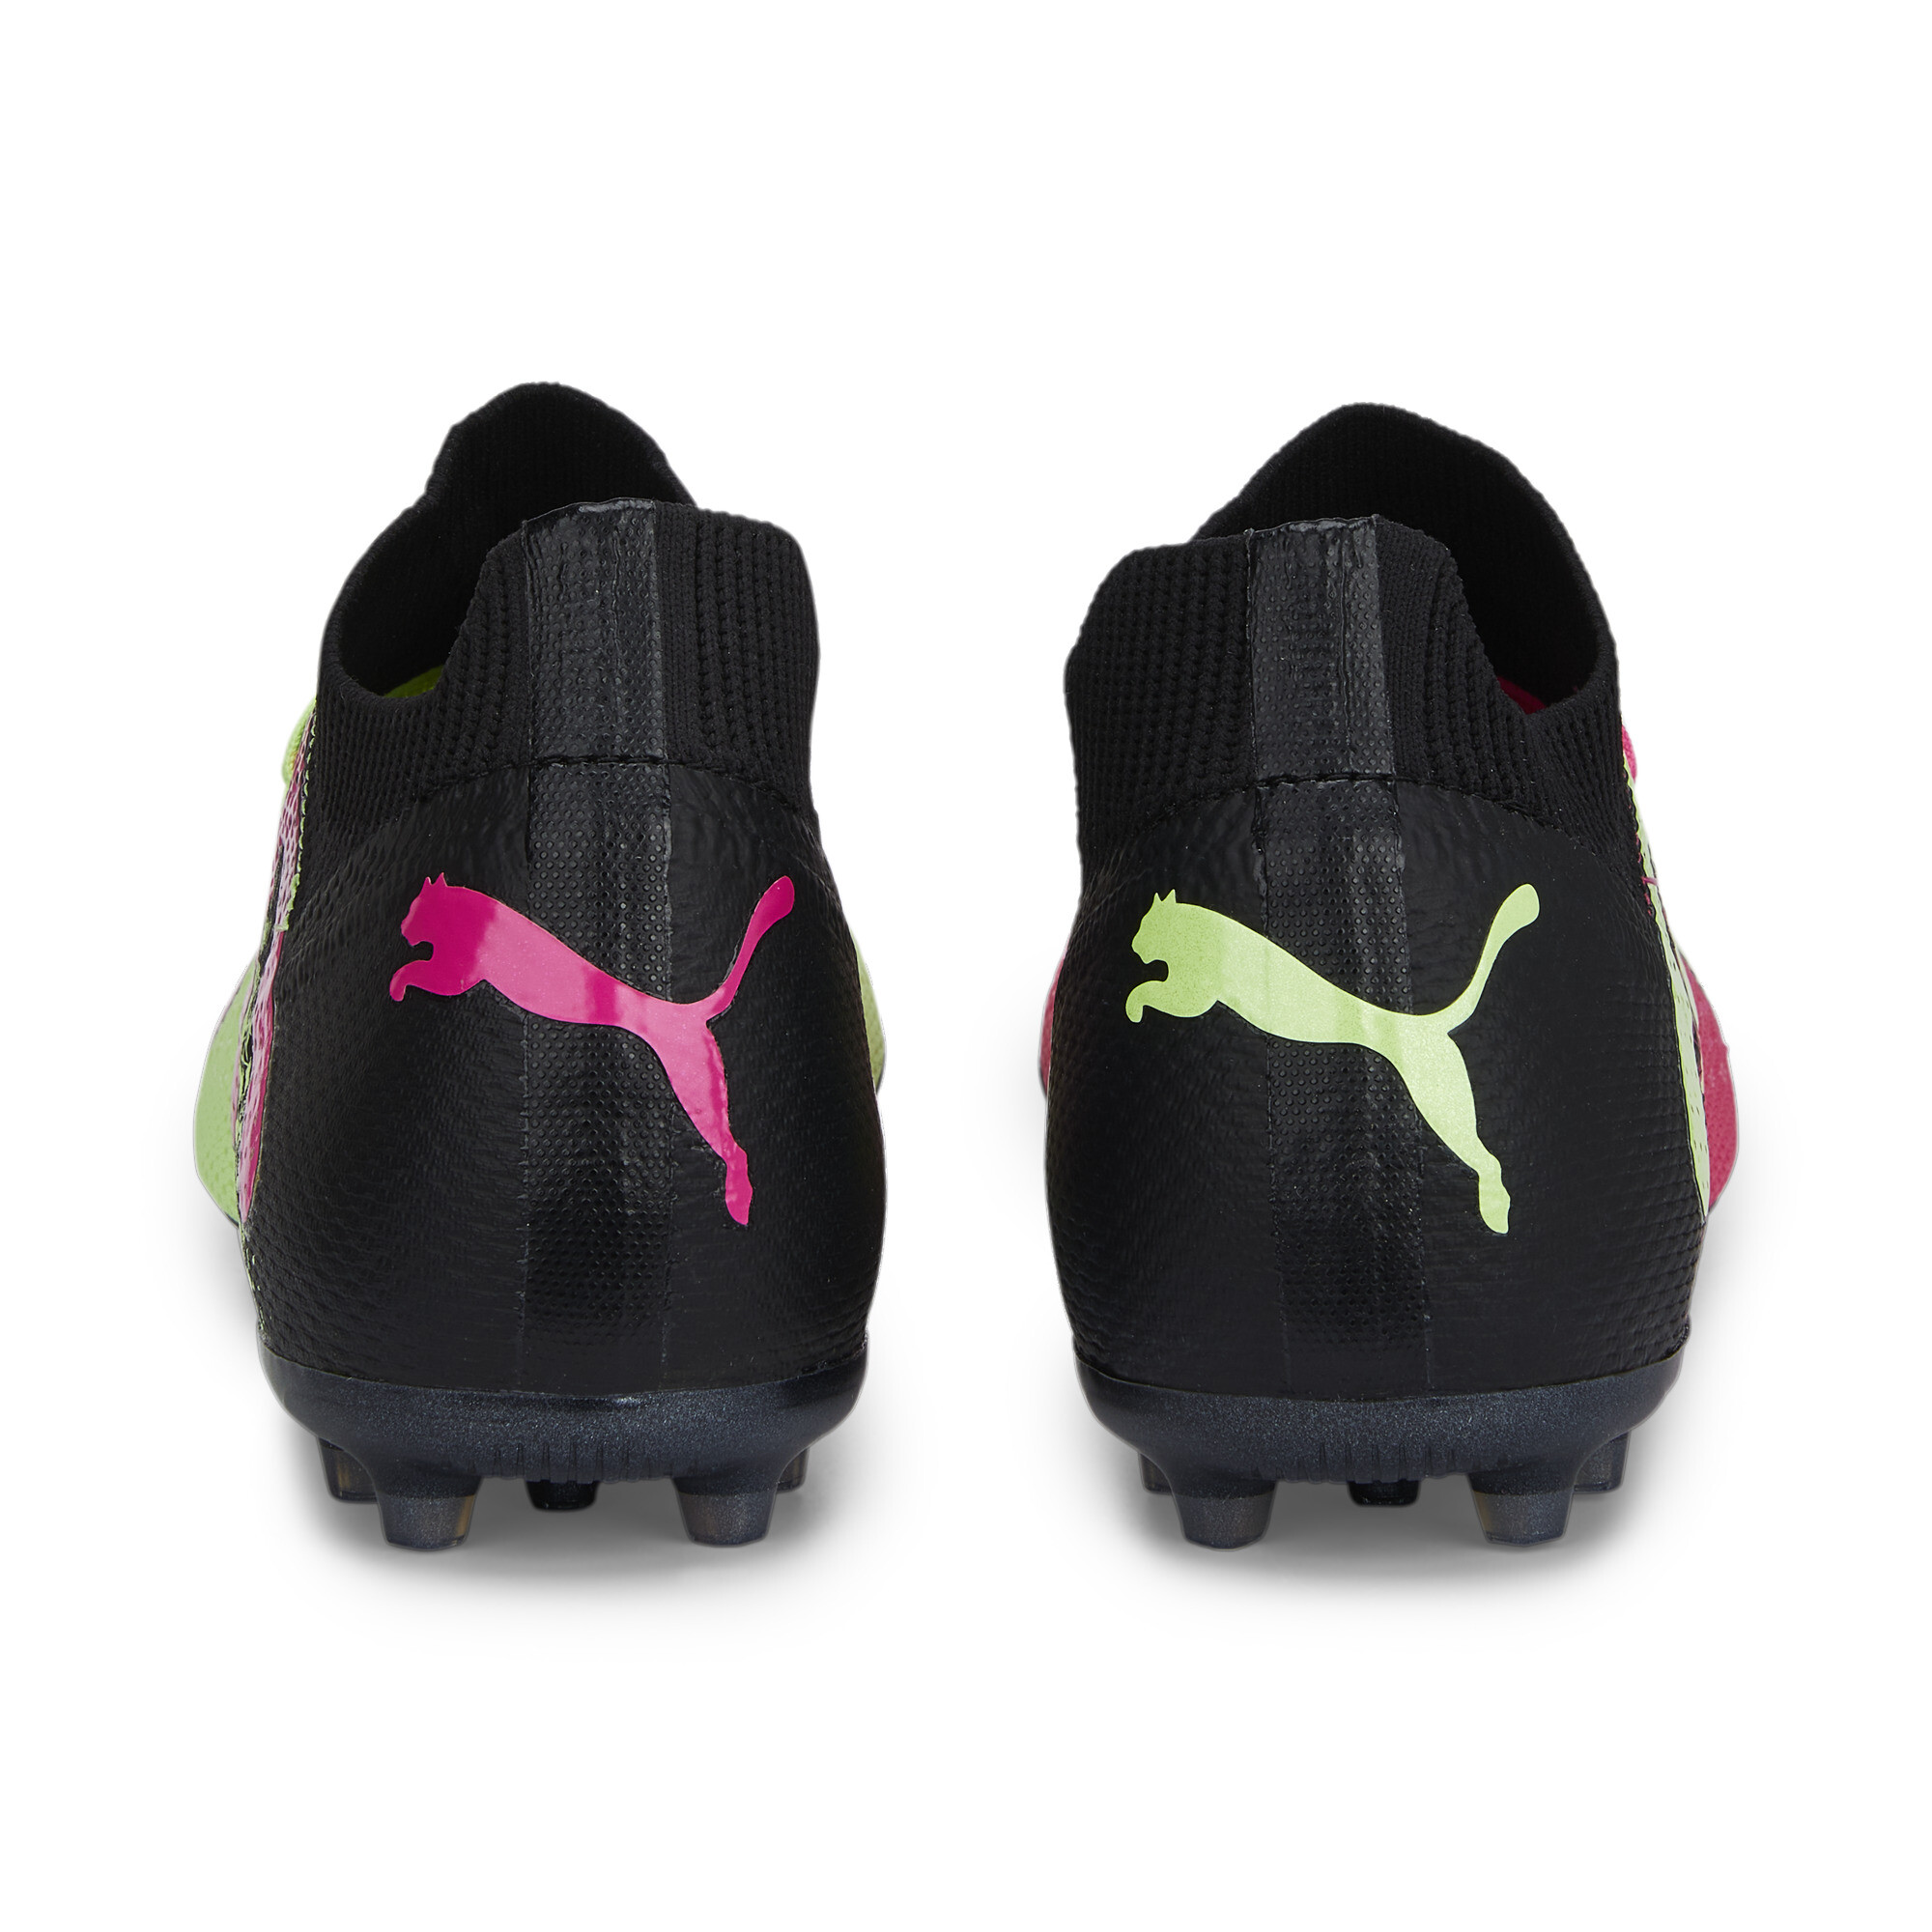 Men's Puma FUTURE ULTIMATE TRICKS MG Football Boots, Black, Size 38.5, Shoes